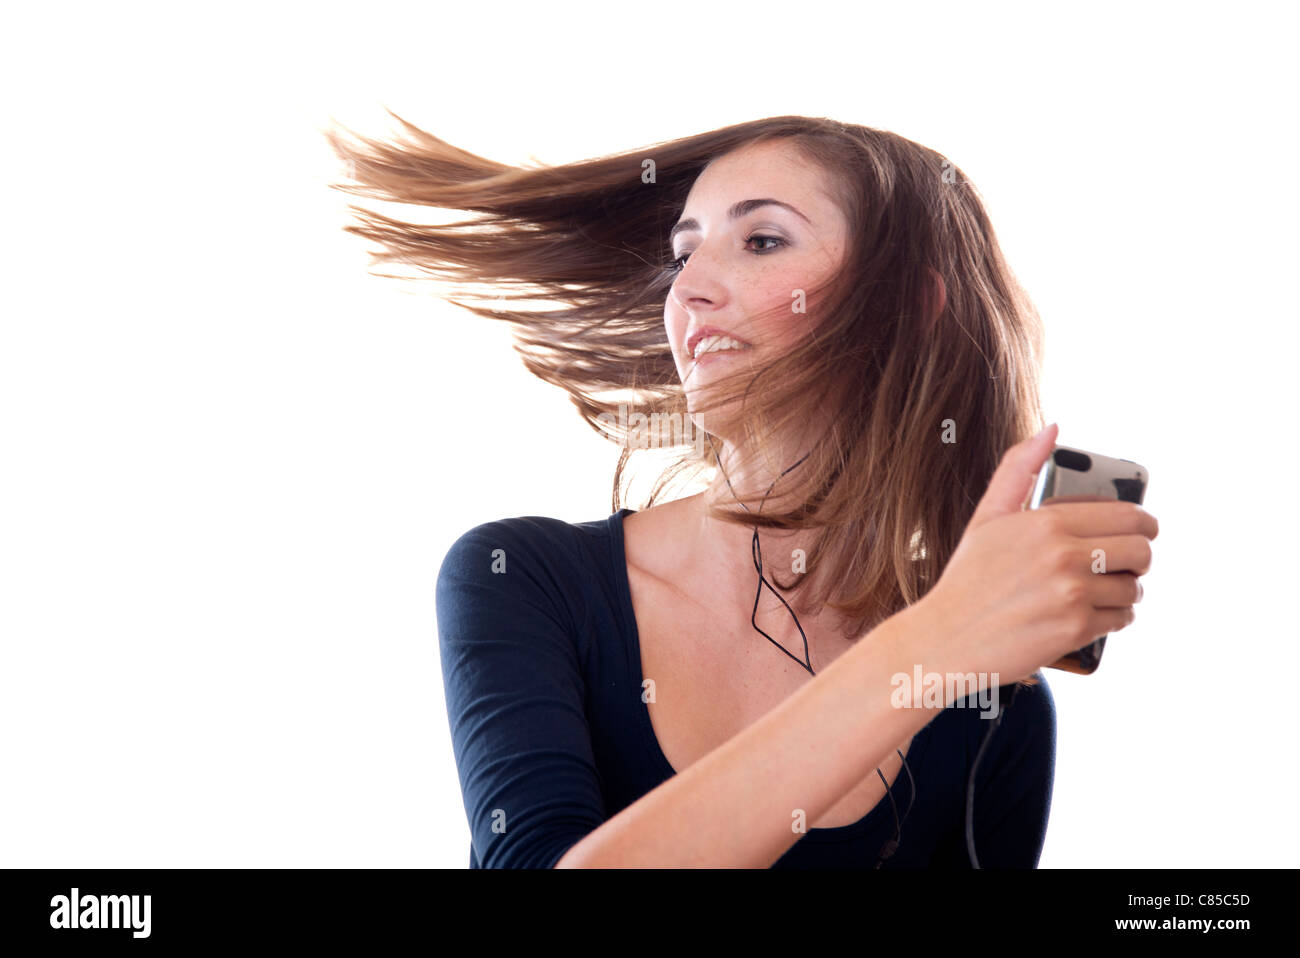 young woman dancing to music with hair swishing Stock Photo